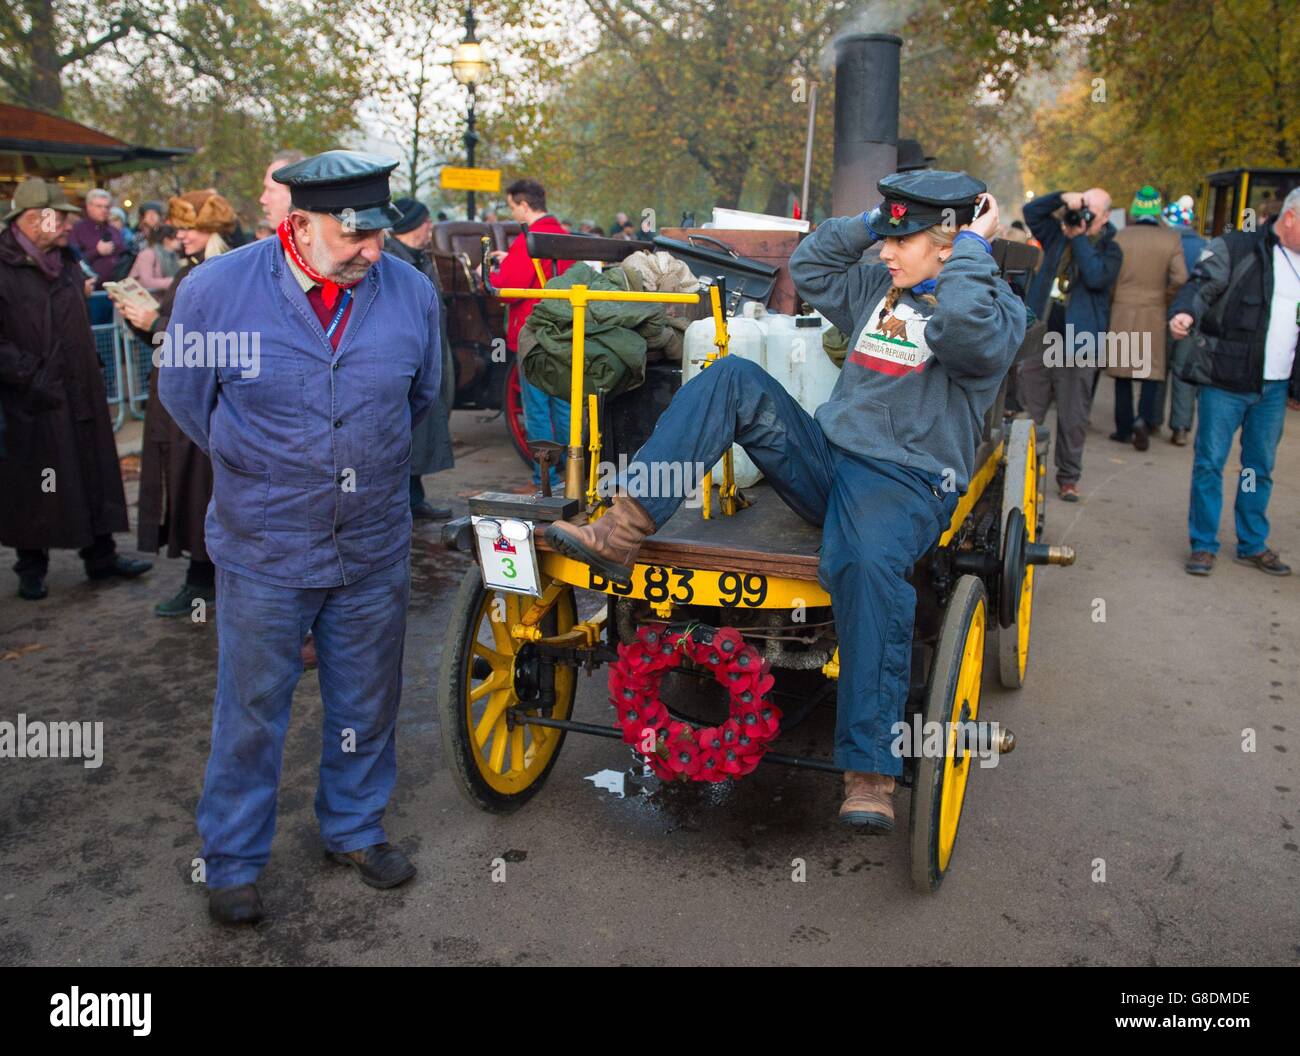 Participants in the Bonhams London to Brighton Veteran Car Run wait before the start at Hyde Park, London. Stock Photo